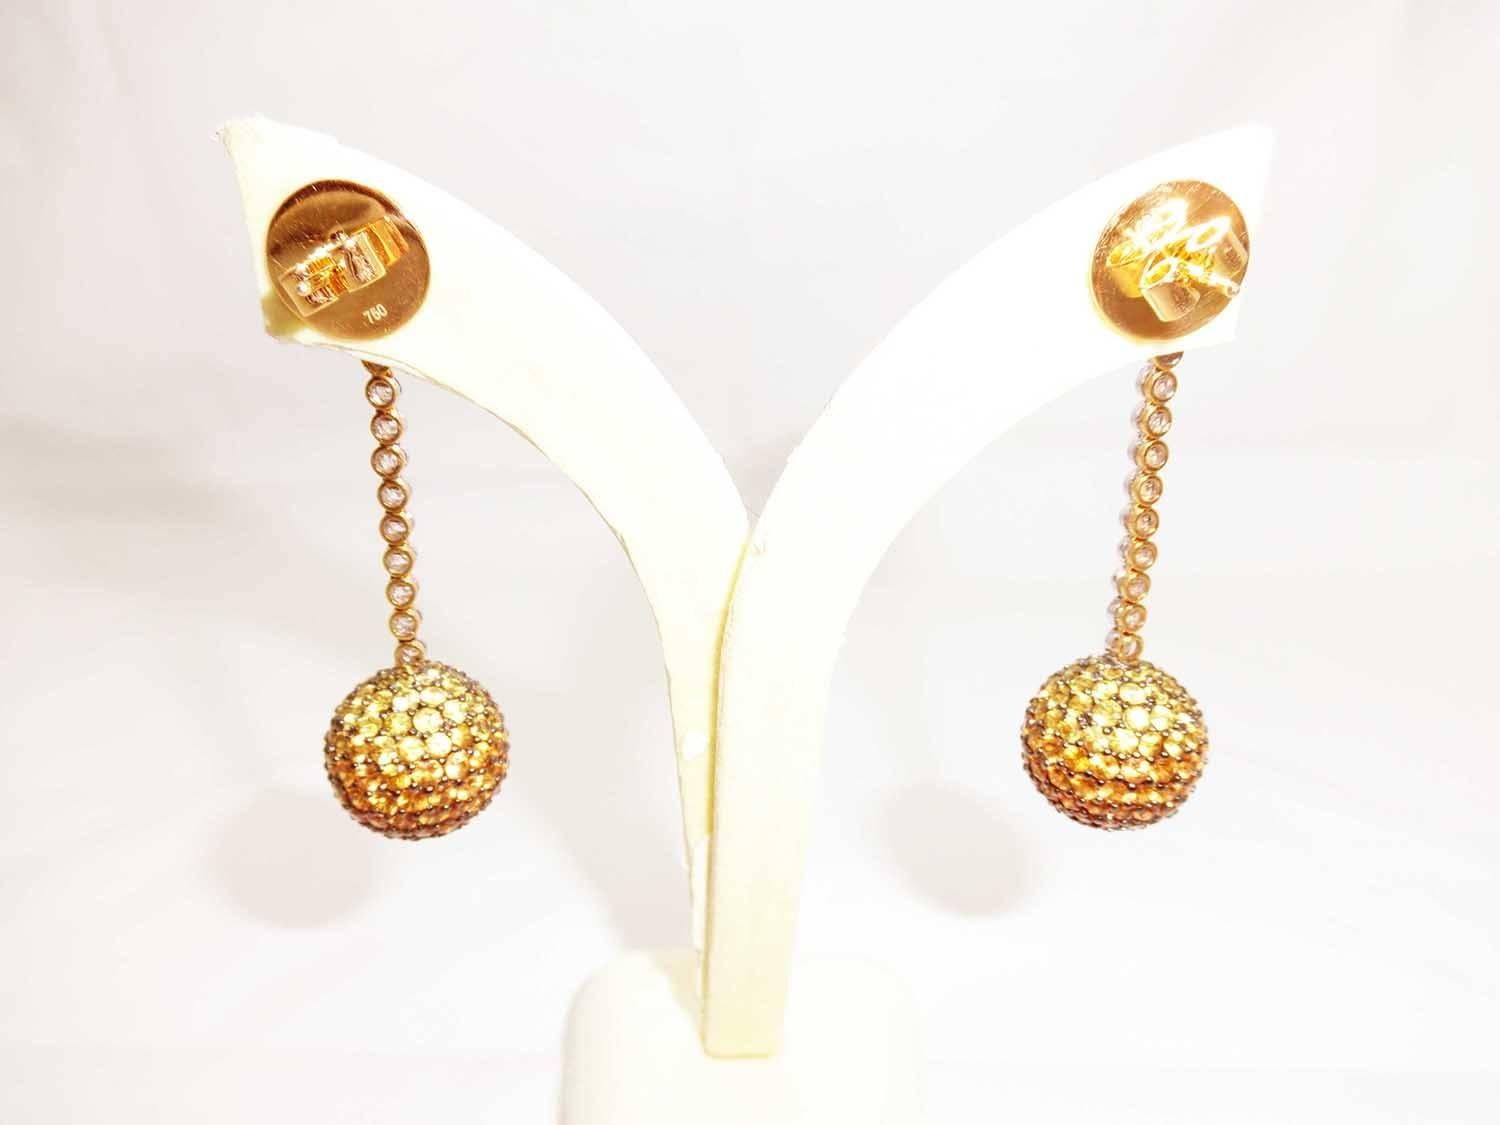 18 karat gold ball earrings